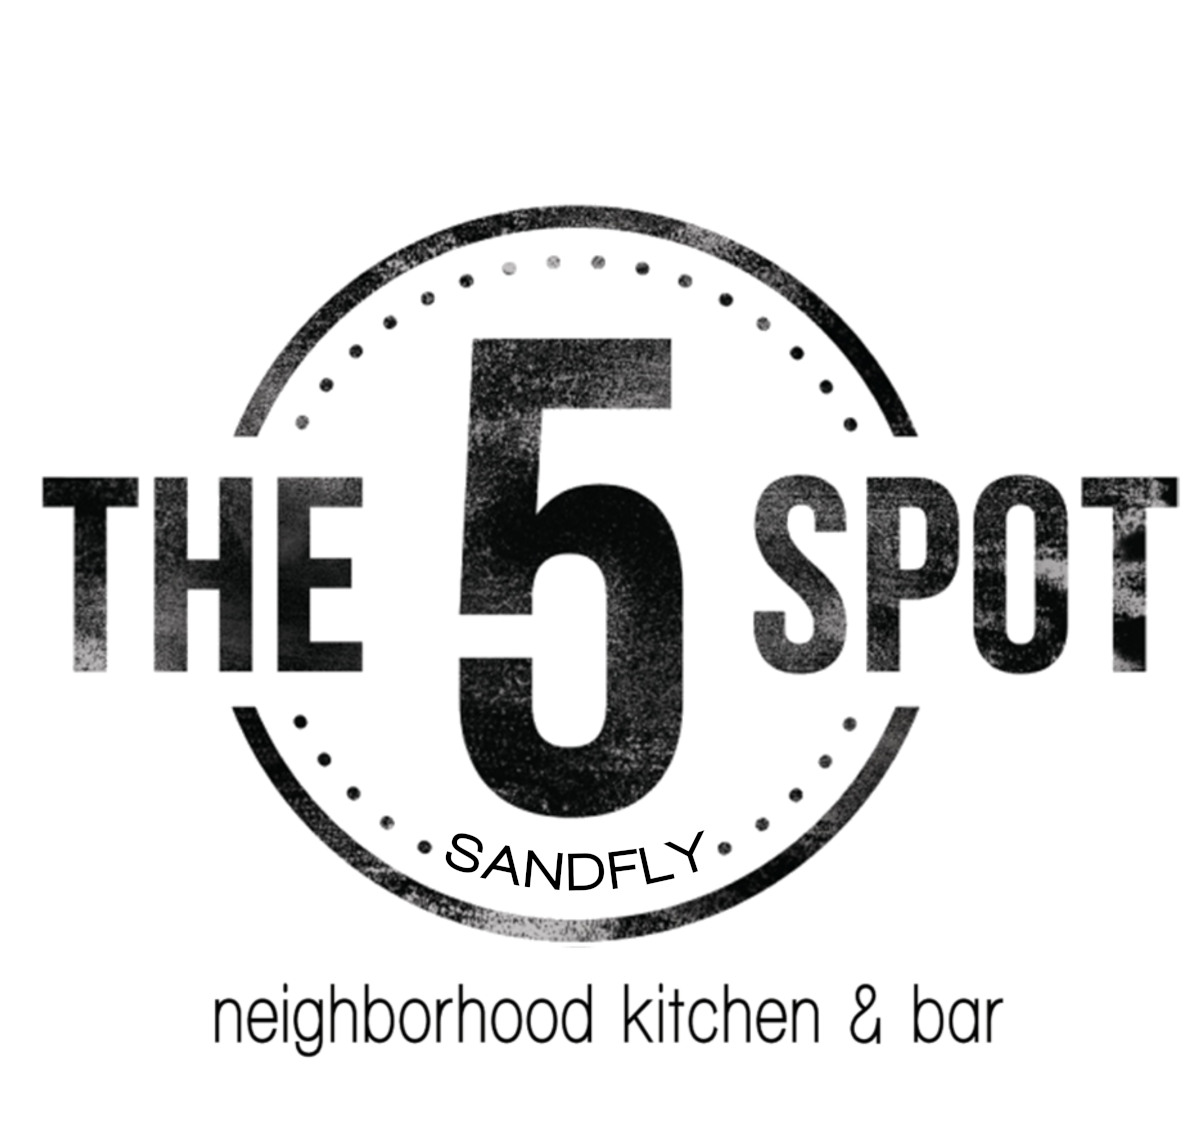 5 Spot Sandfly logo